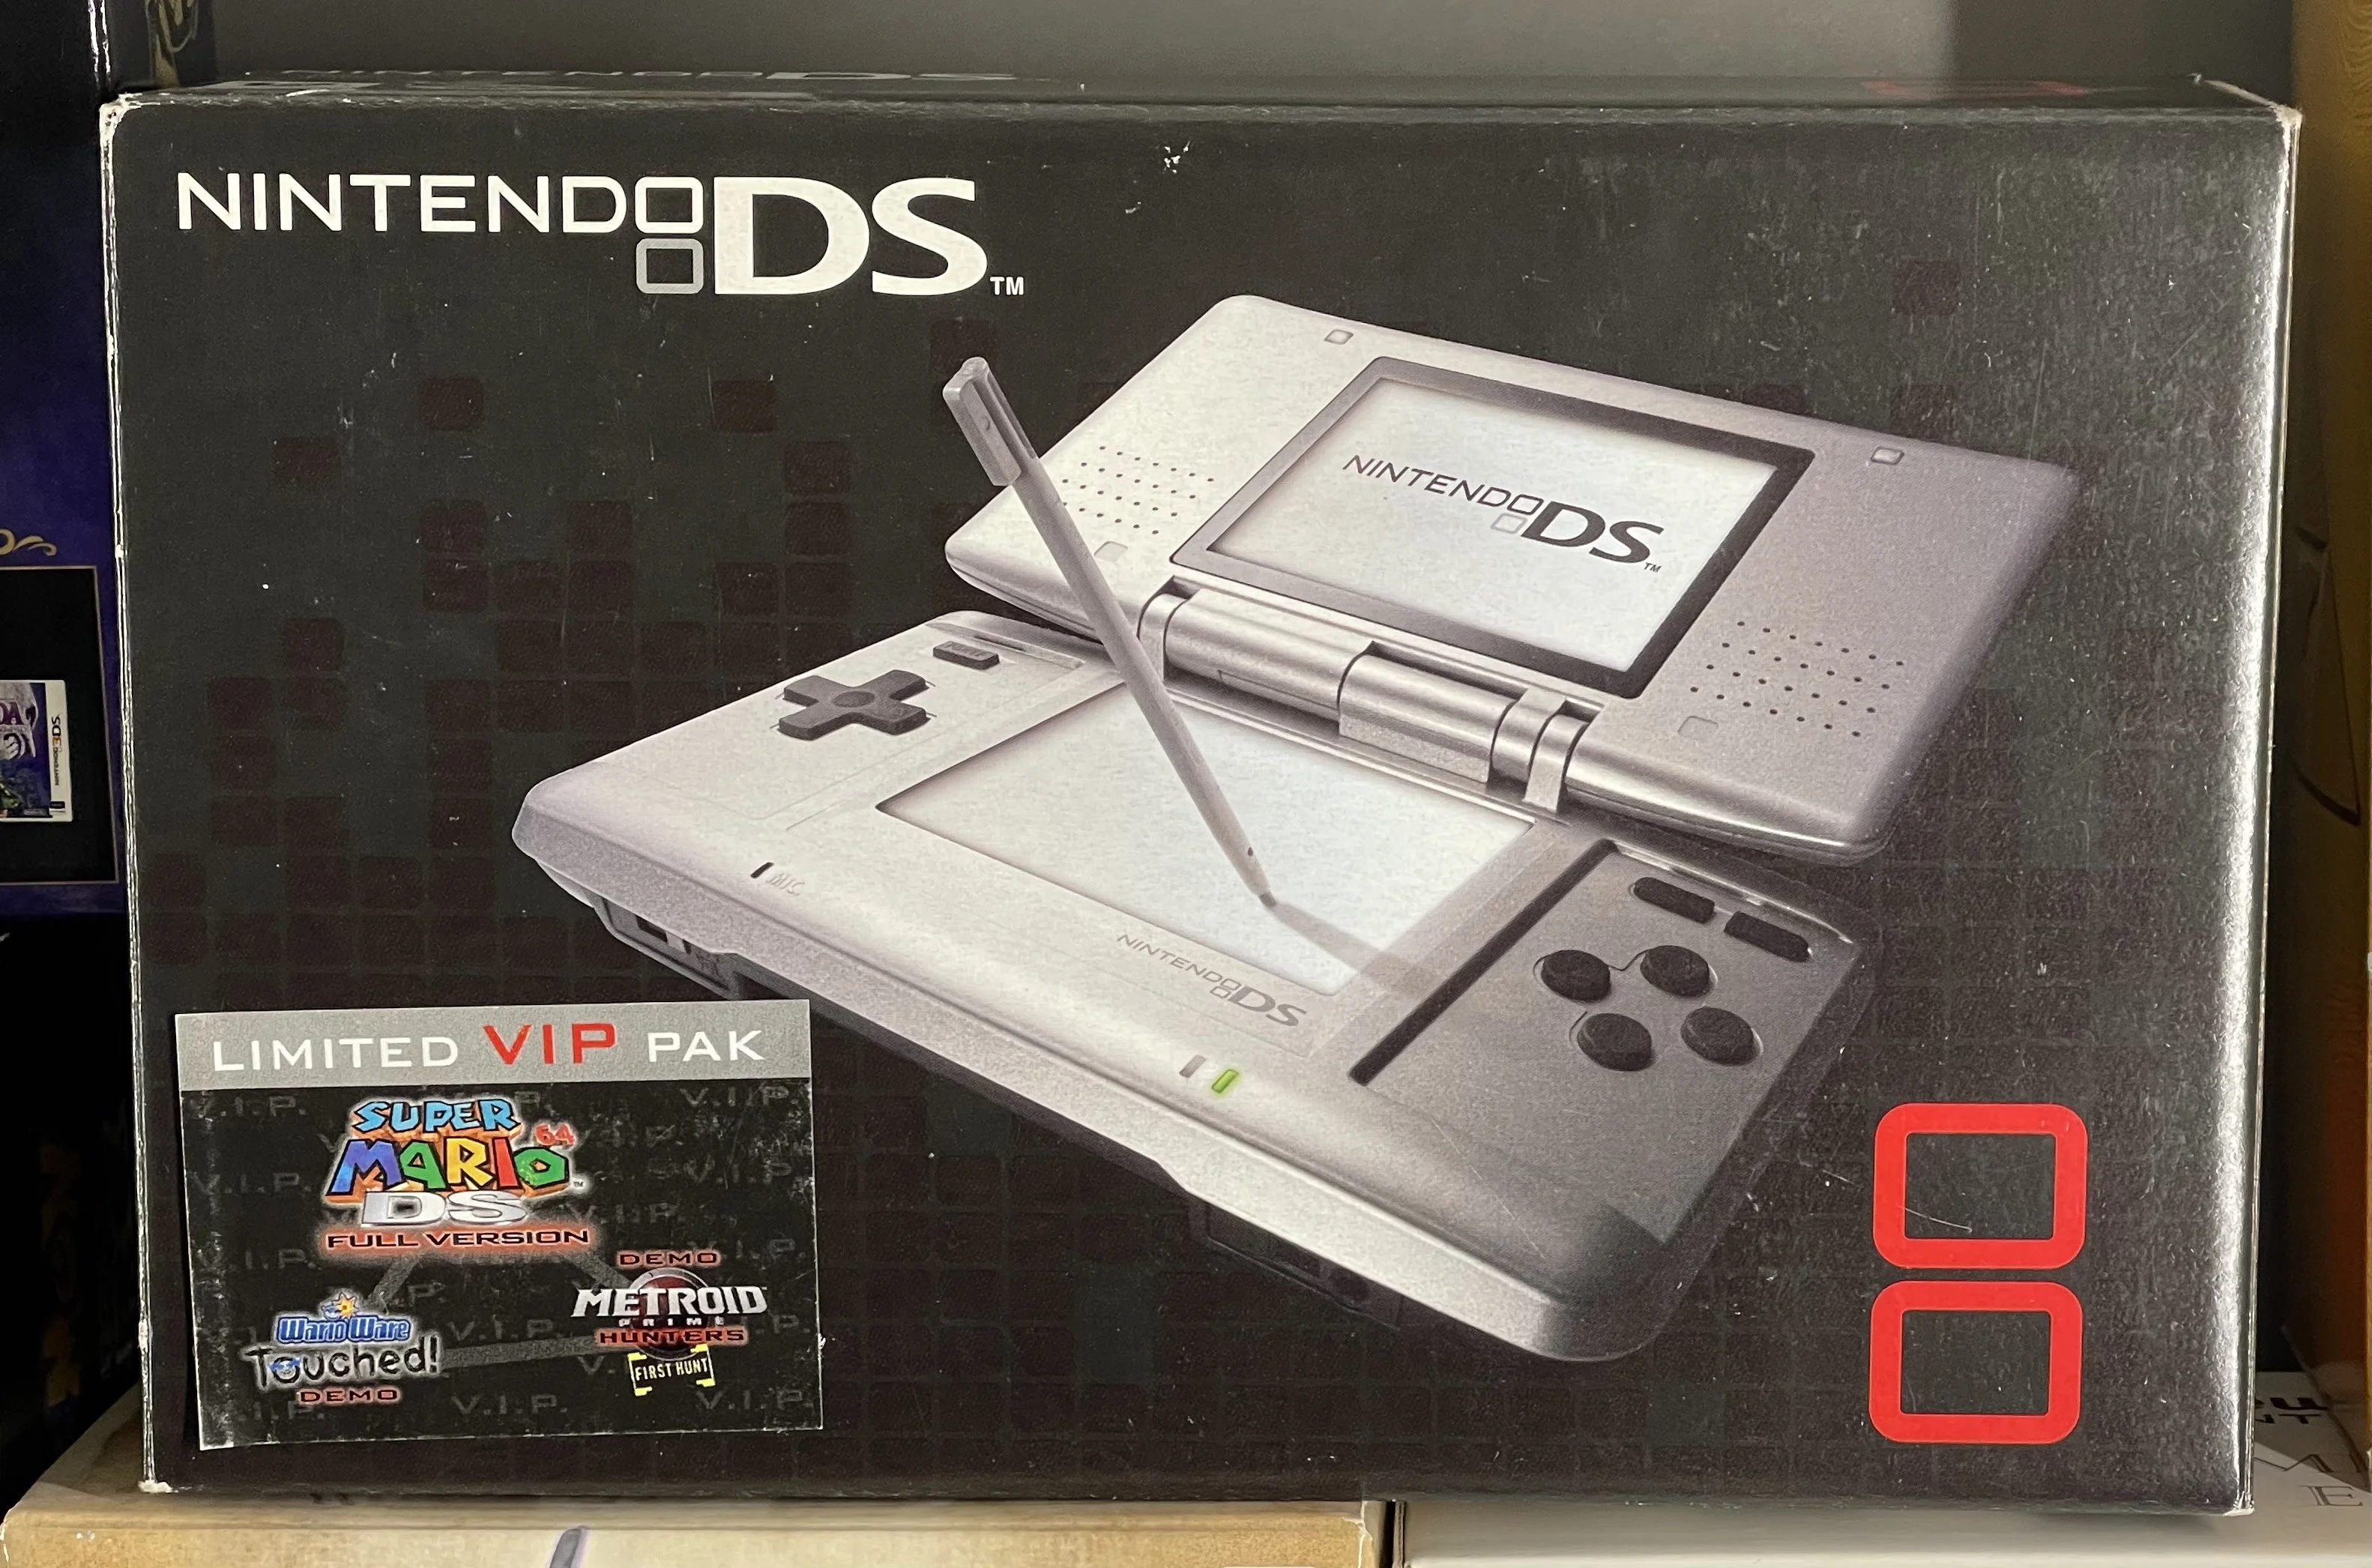  Nintendo DS Limited VIP PAK